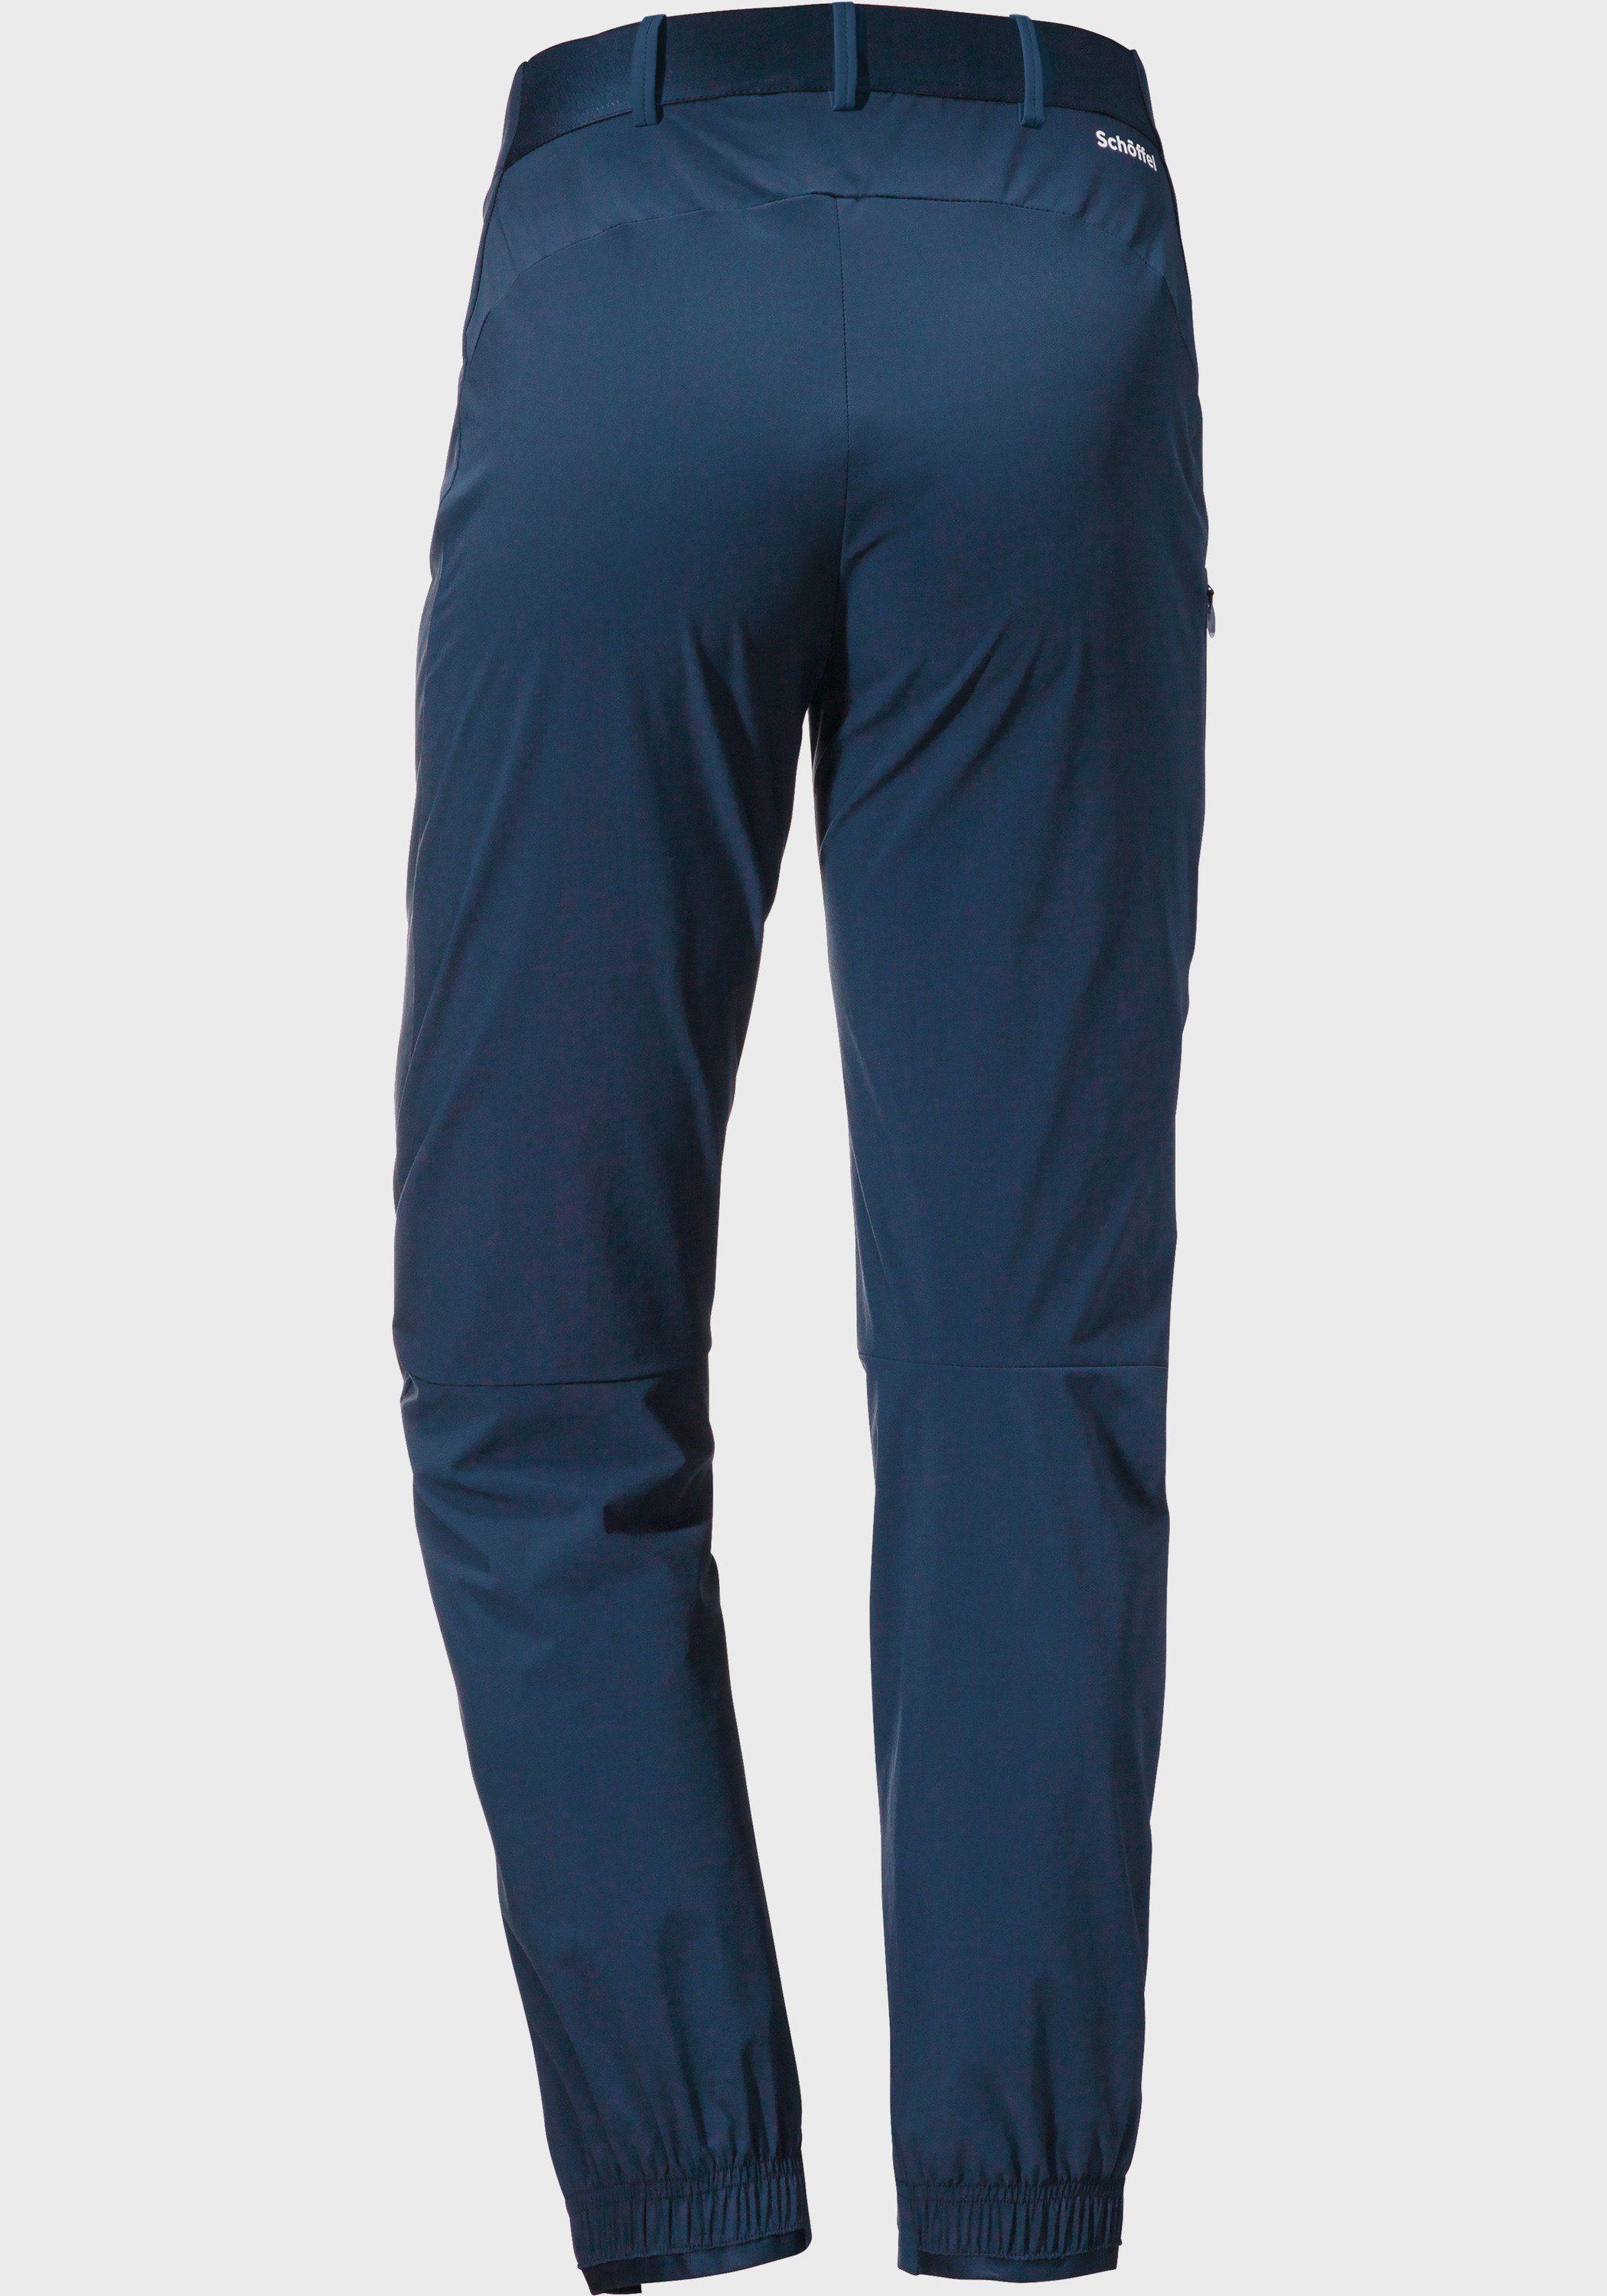 L Schöffel blau Hestad Outdoorhose Pants